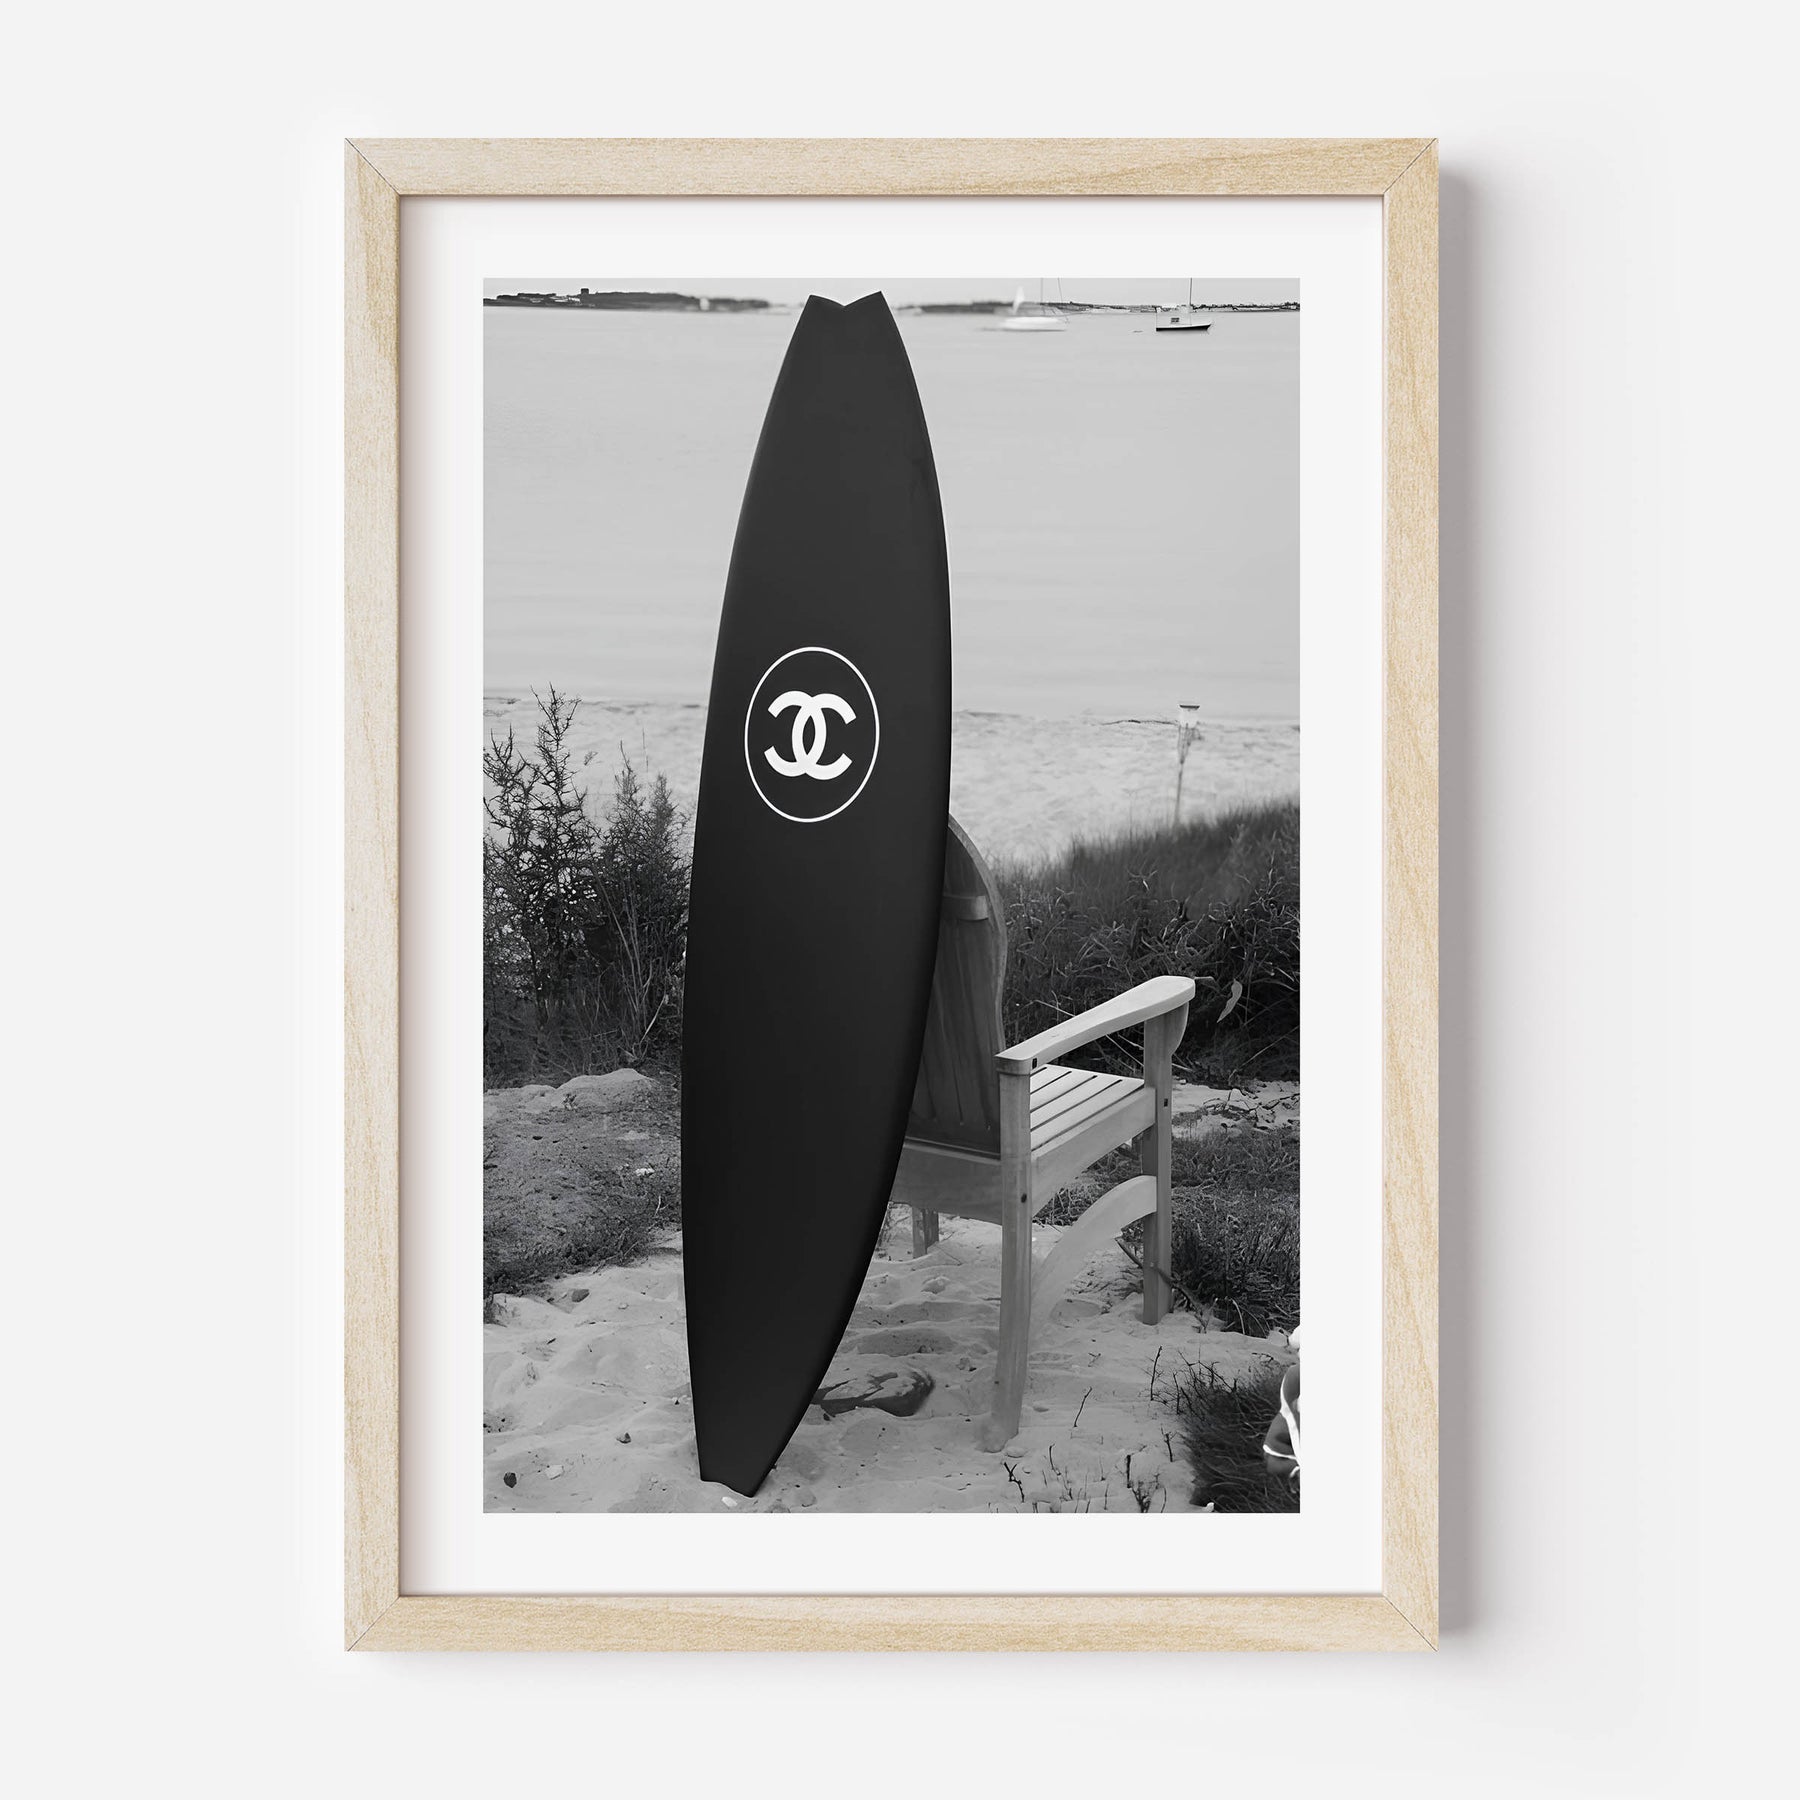 Chanel Surfer Poster